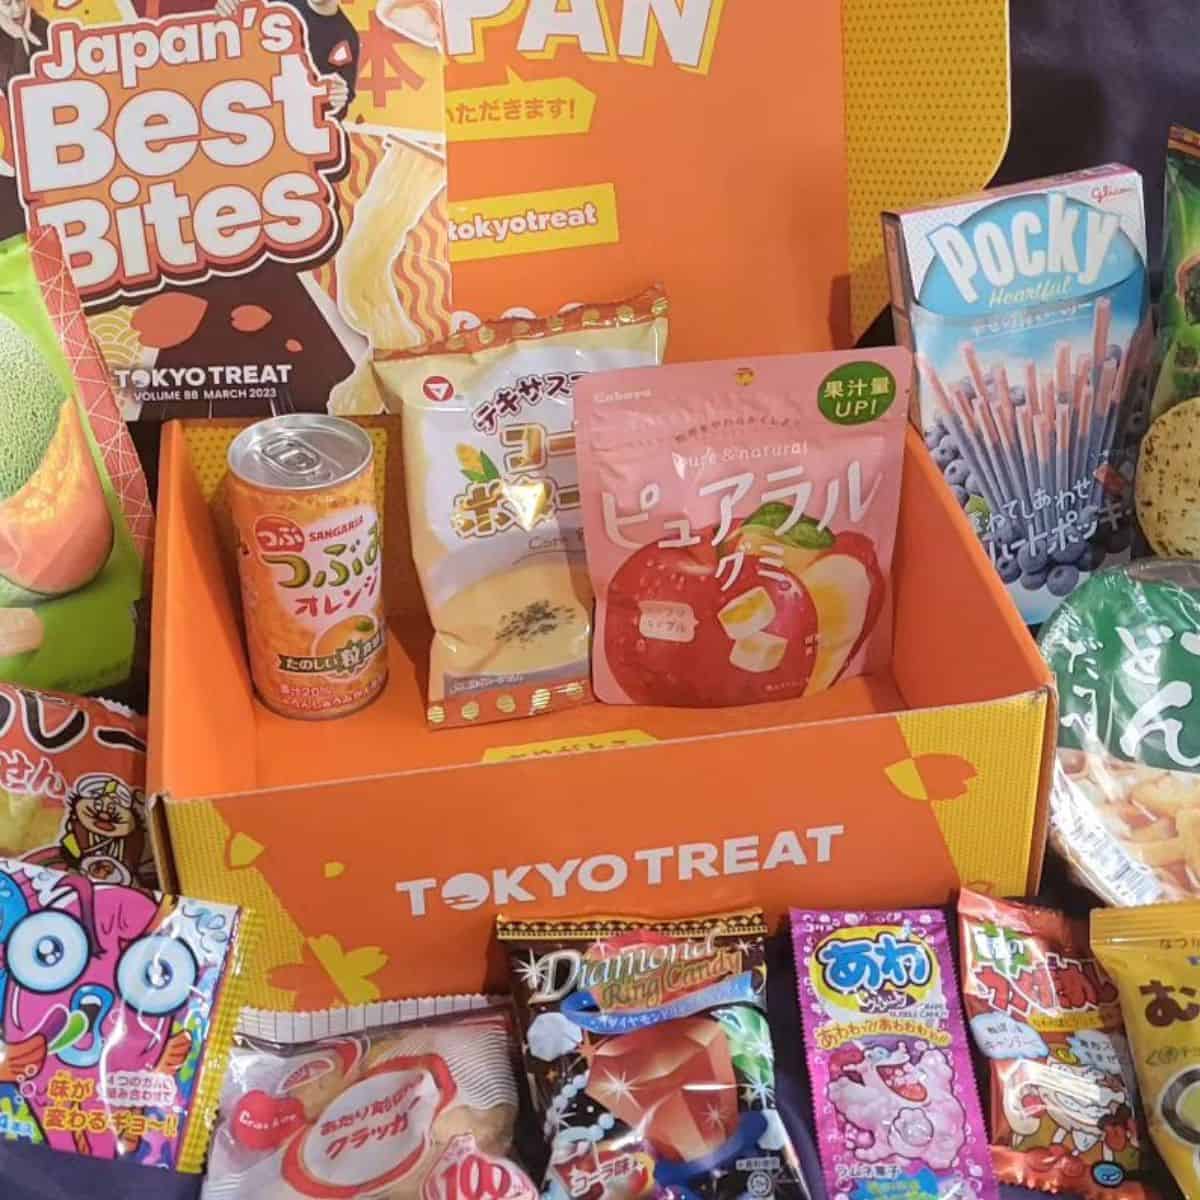 Japanese candies and chocolates inside and around an orange storage